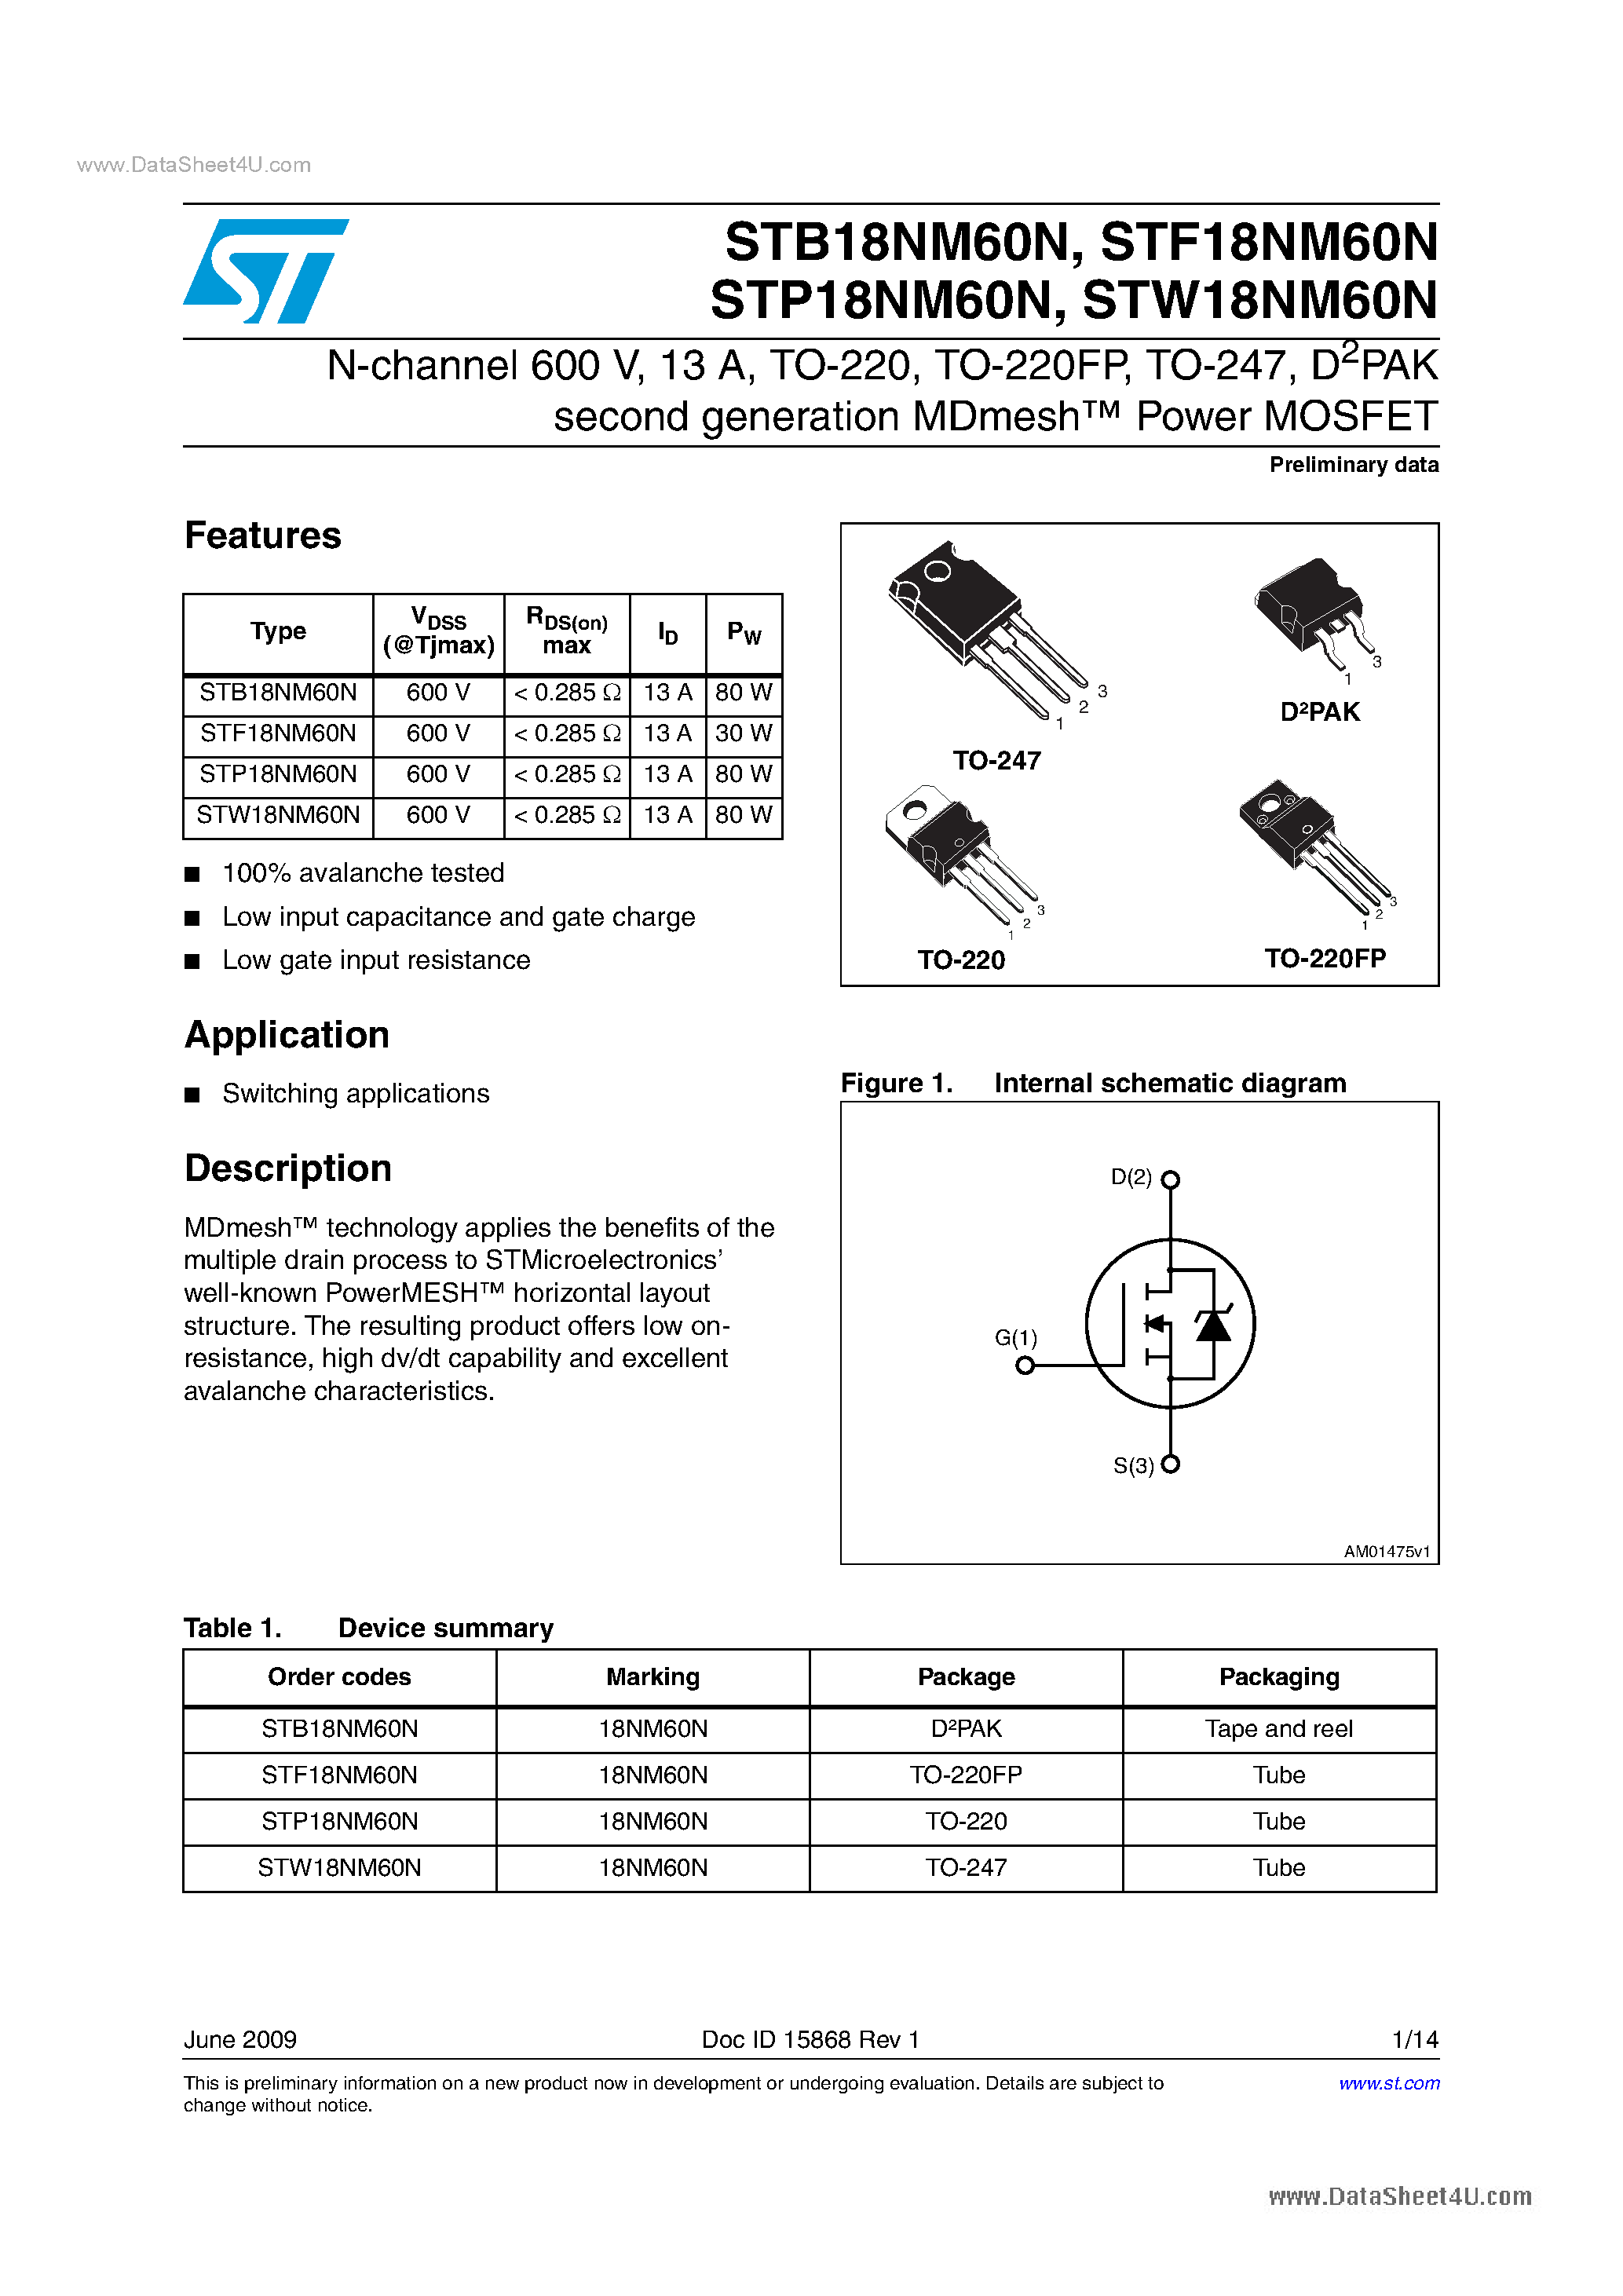 Datasheet STP18NM60N - Power MOSFET page 1